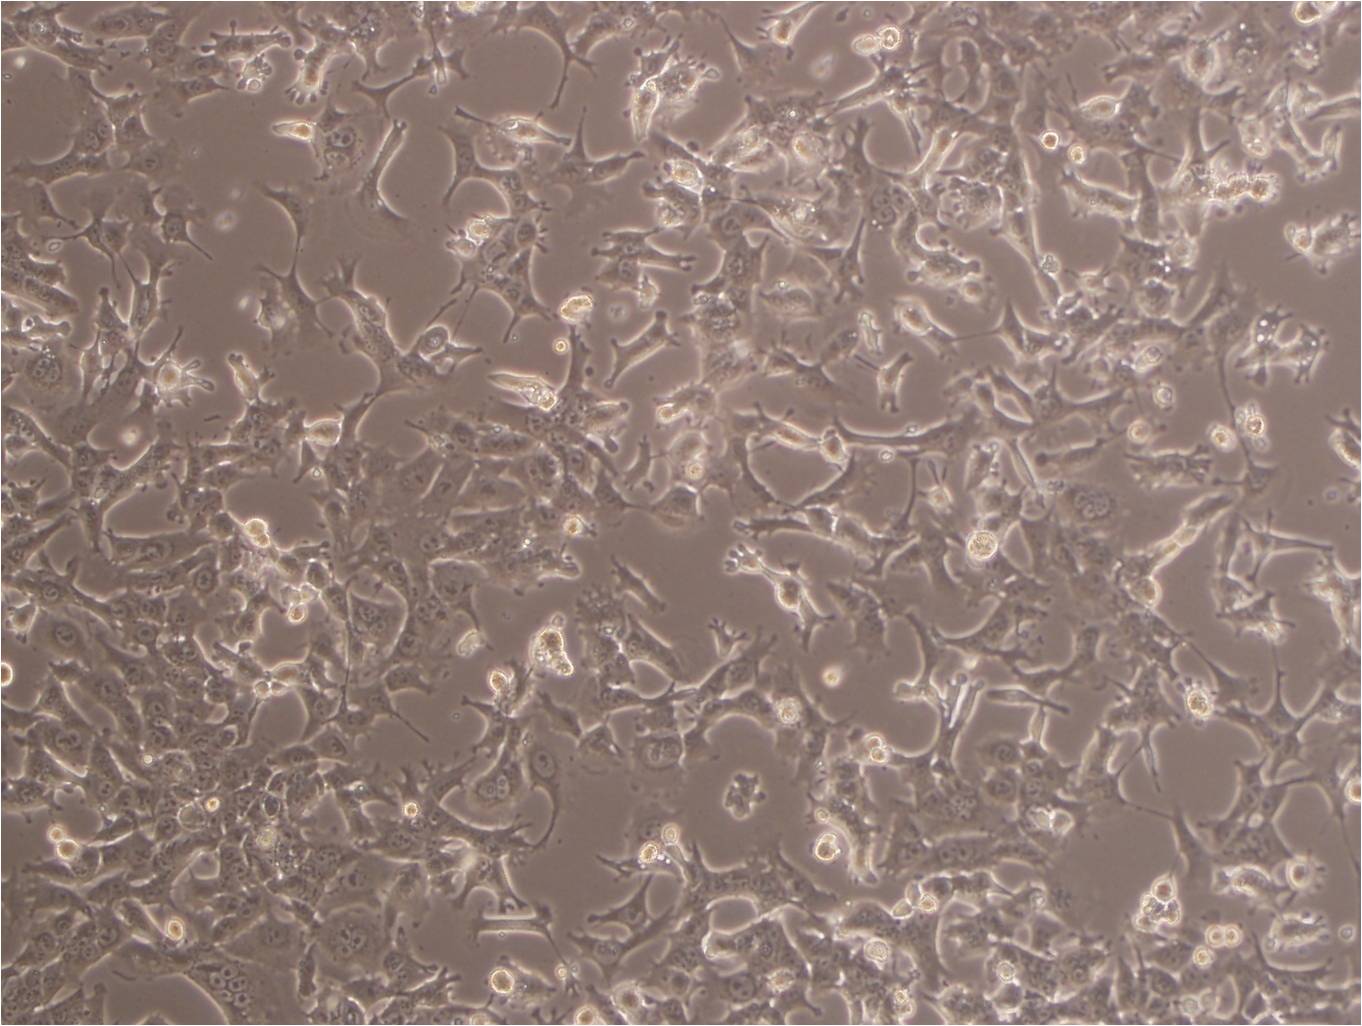 HCEC-12 epithelioid cells人角膜内皮细胞系,HCEC-12 epithelioid cells